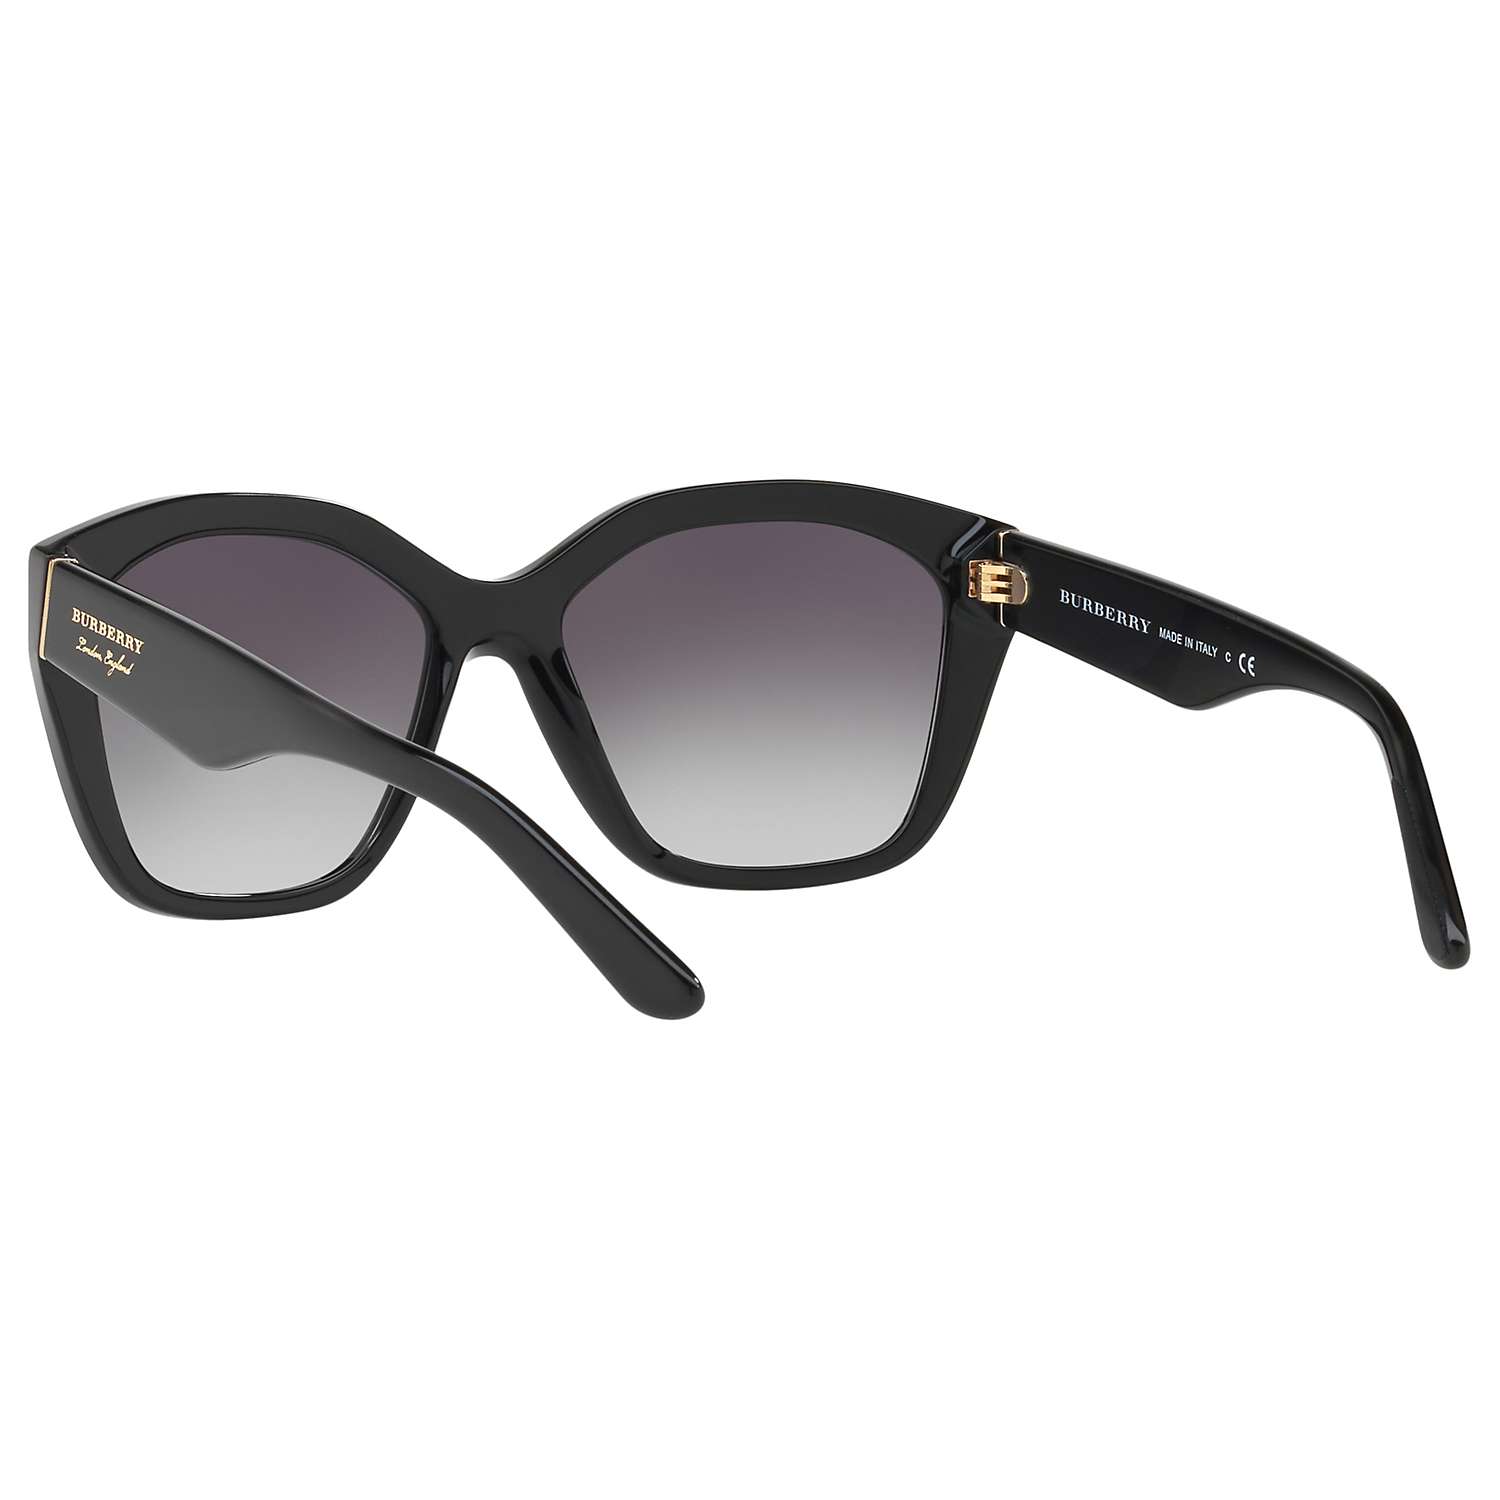 Buy Burberry BE4261 Square Sunglasses, Black/Grey Gradient Online at johnlewis.com